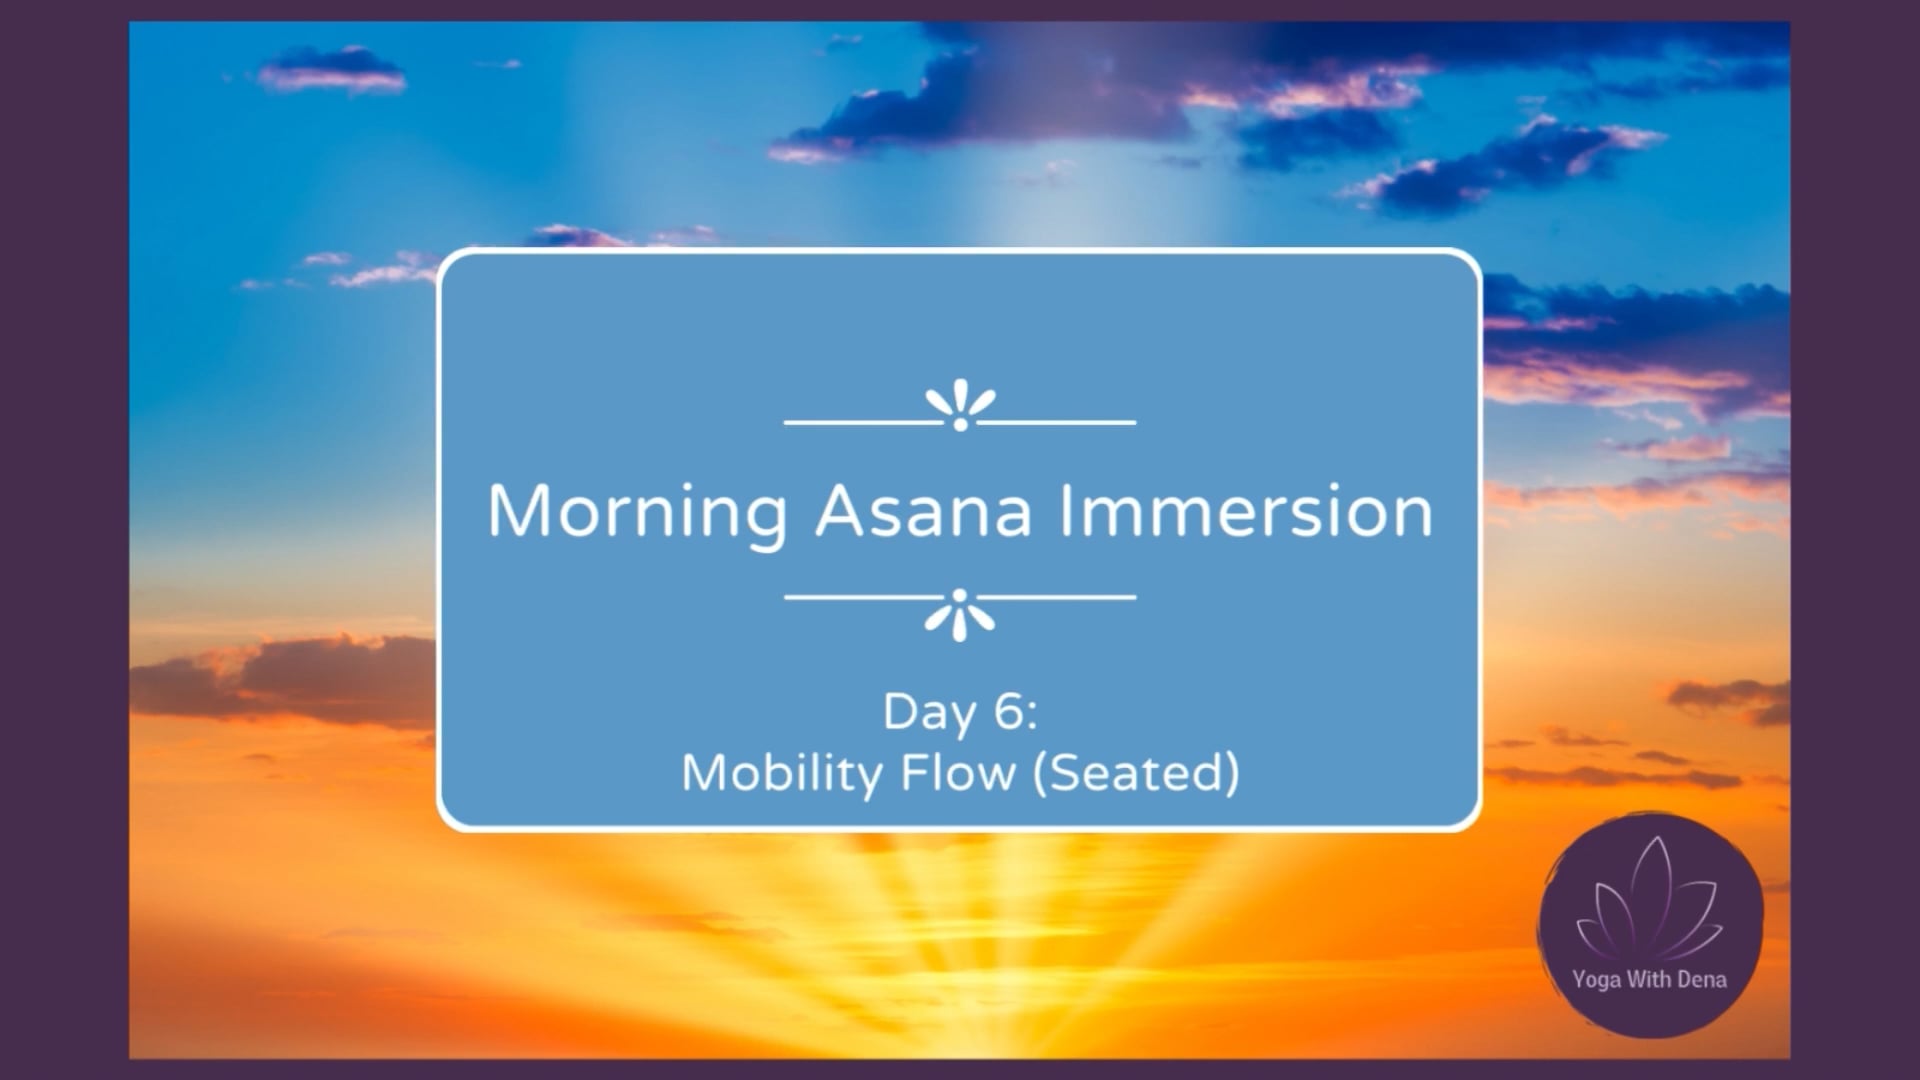 Day 6 - Morning Asana Immersion